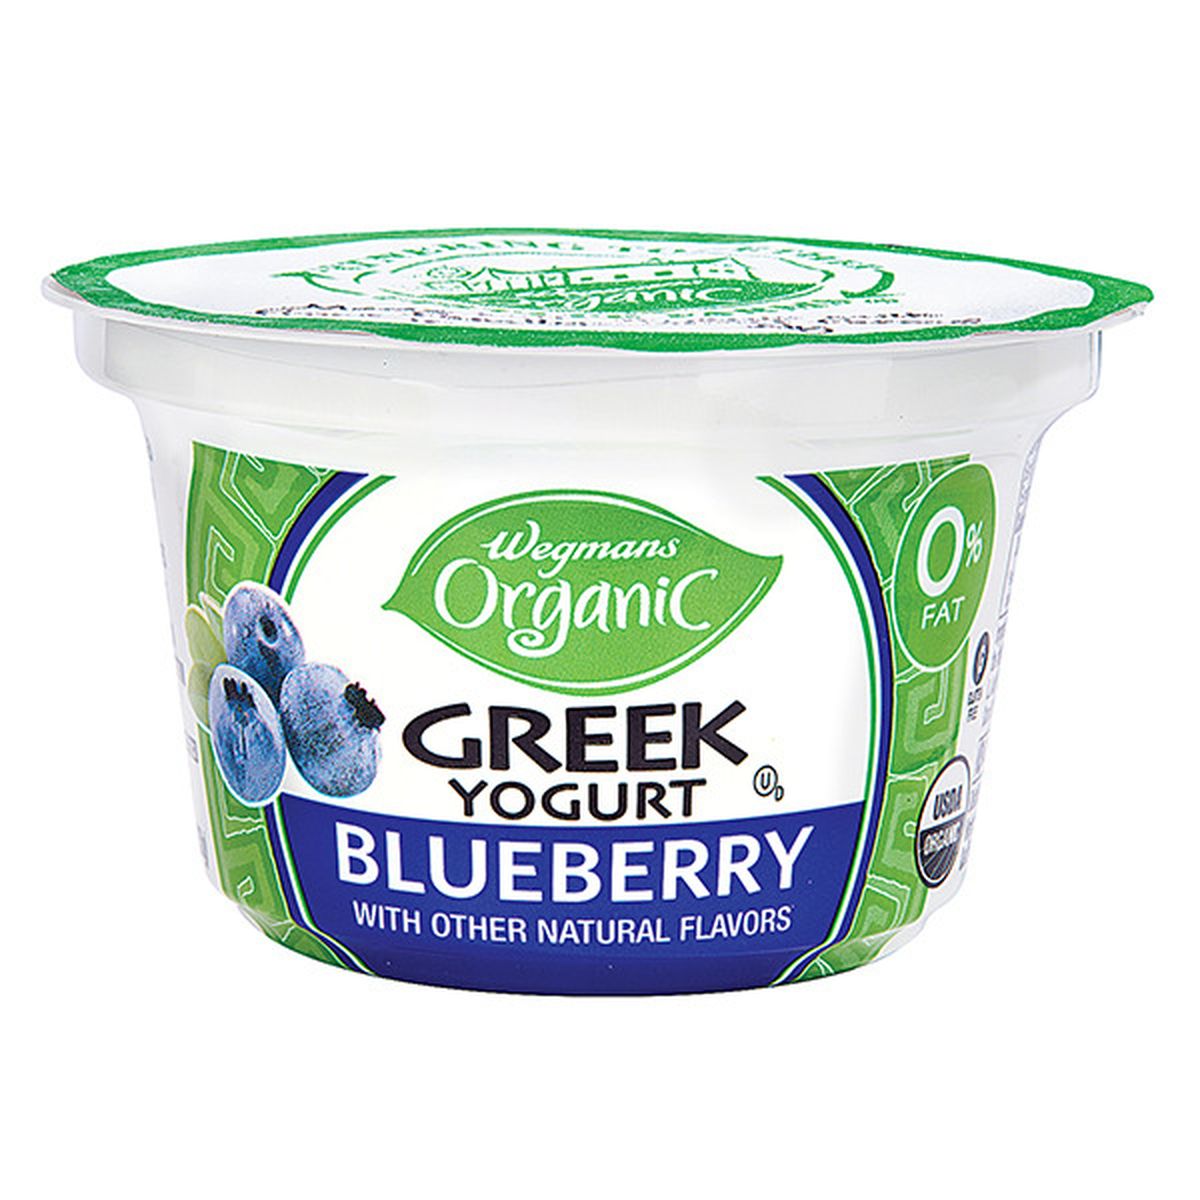 Calories in Wegmans Organic Greek Nonfat Blueberry Yogurt